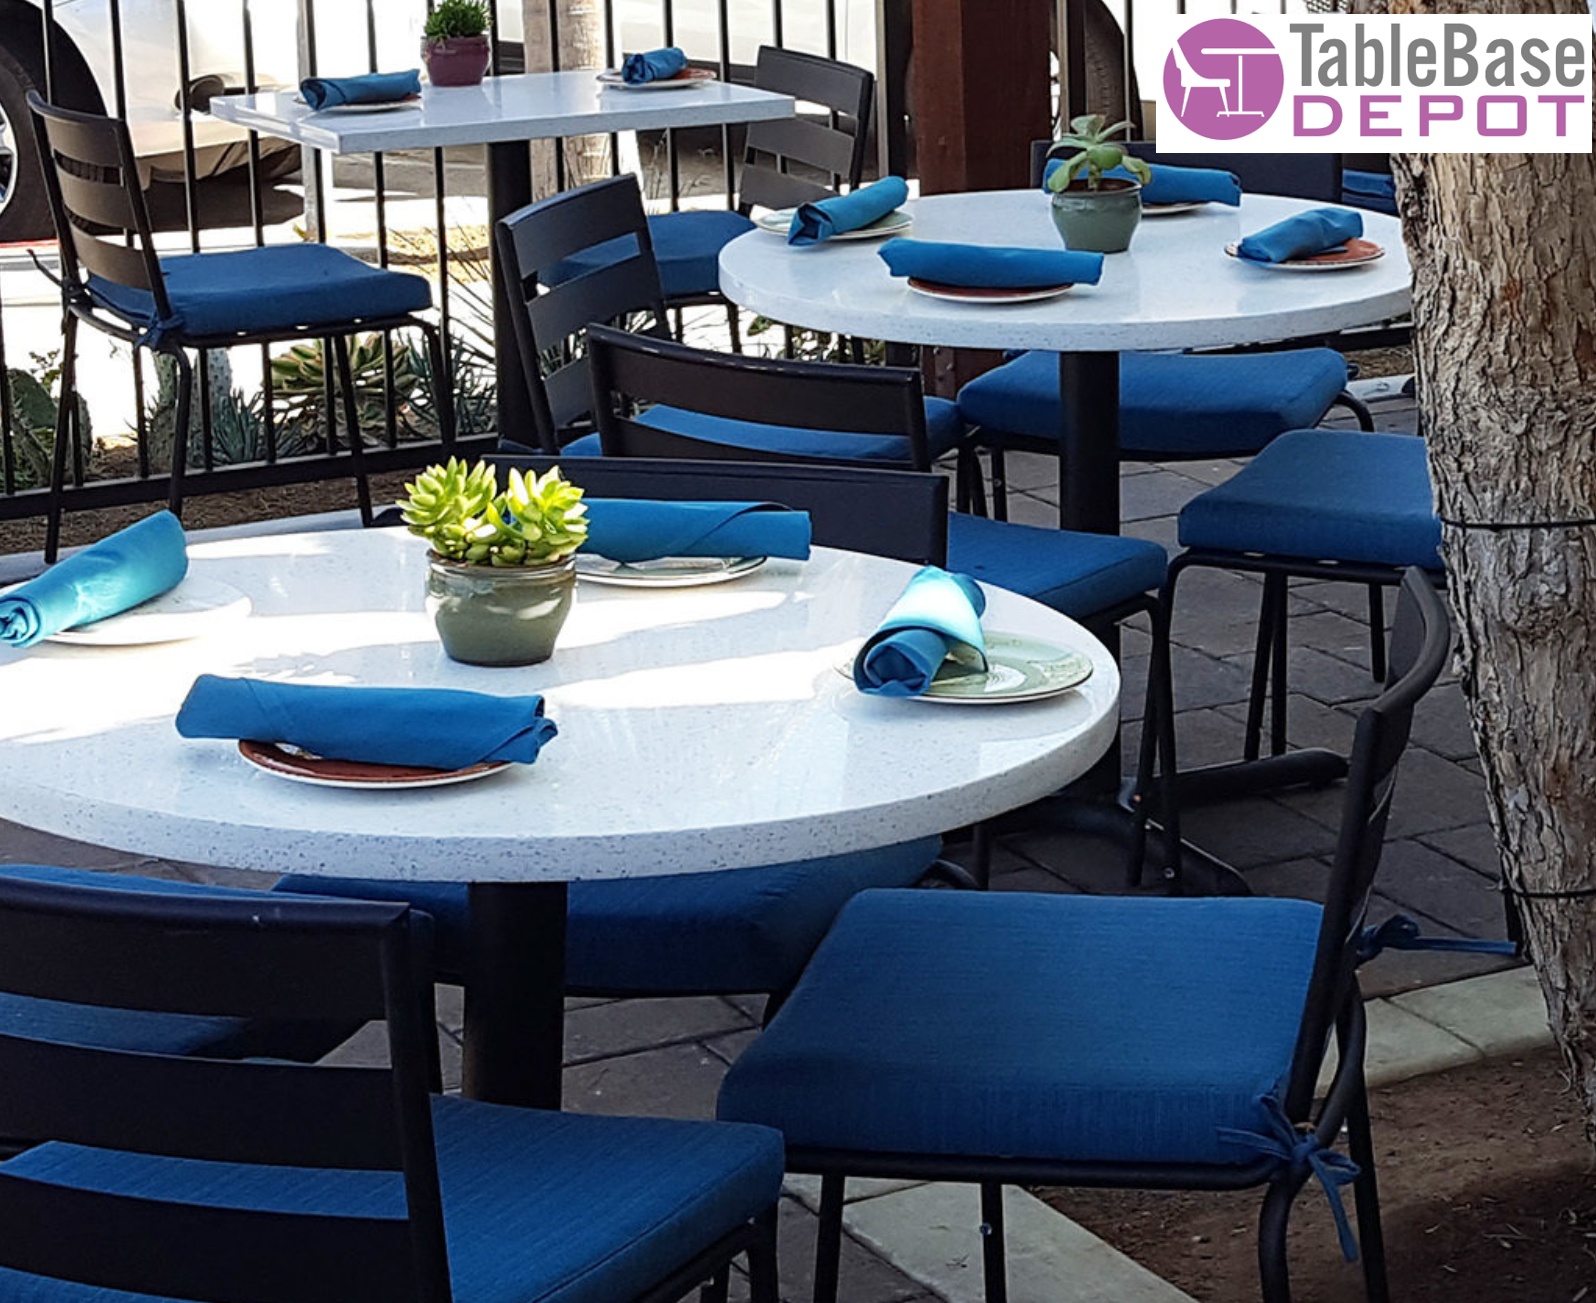 Zirconia White Quartz Restaurant Table Tops In-Outdoor Use